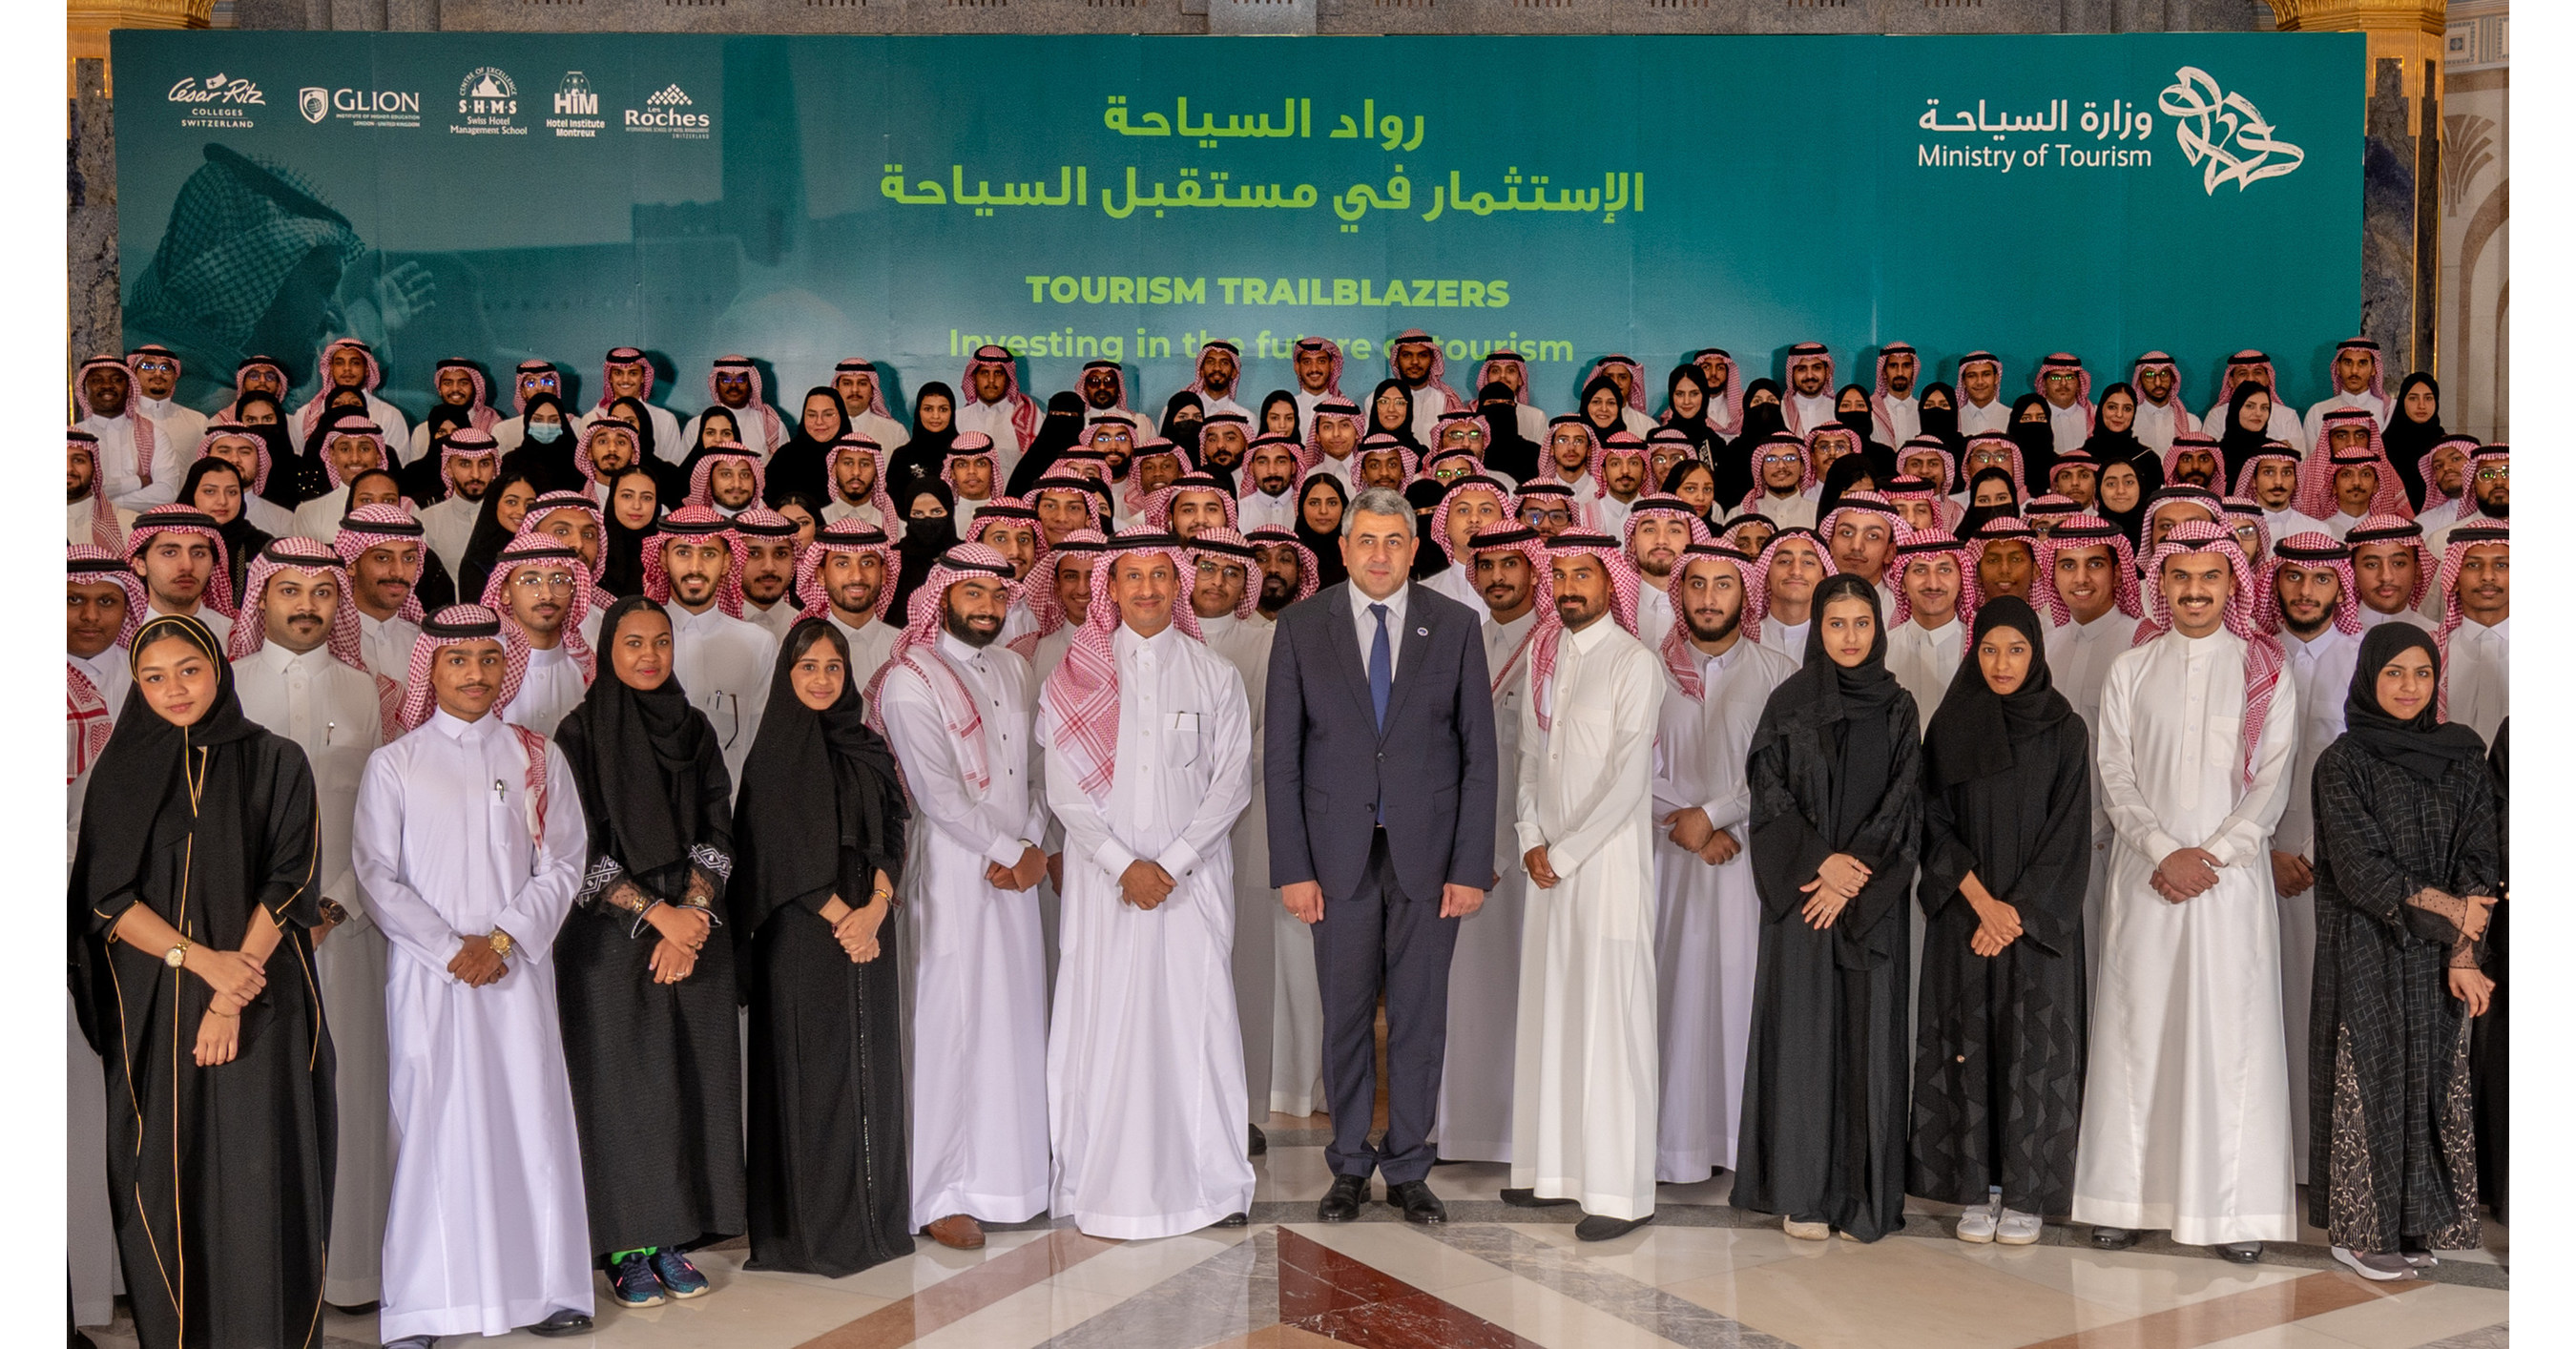 tourism development council saudi arabia